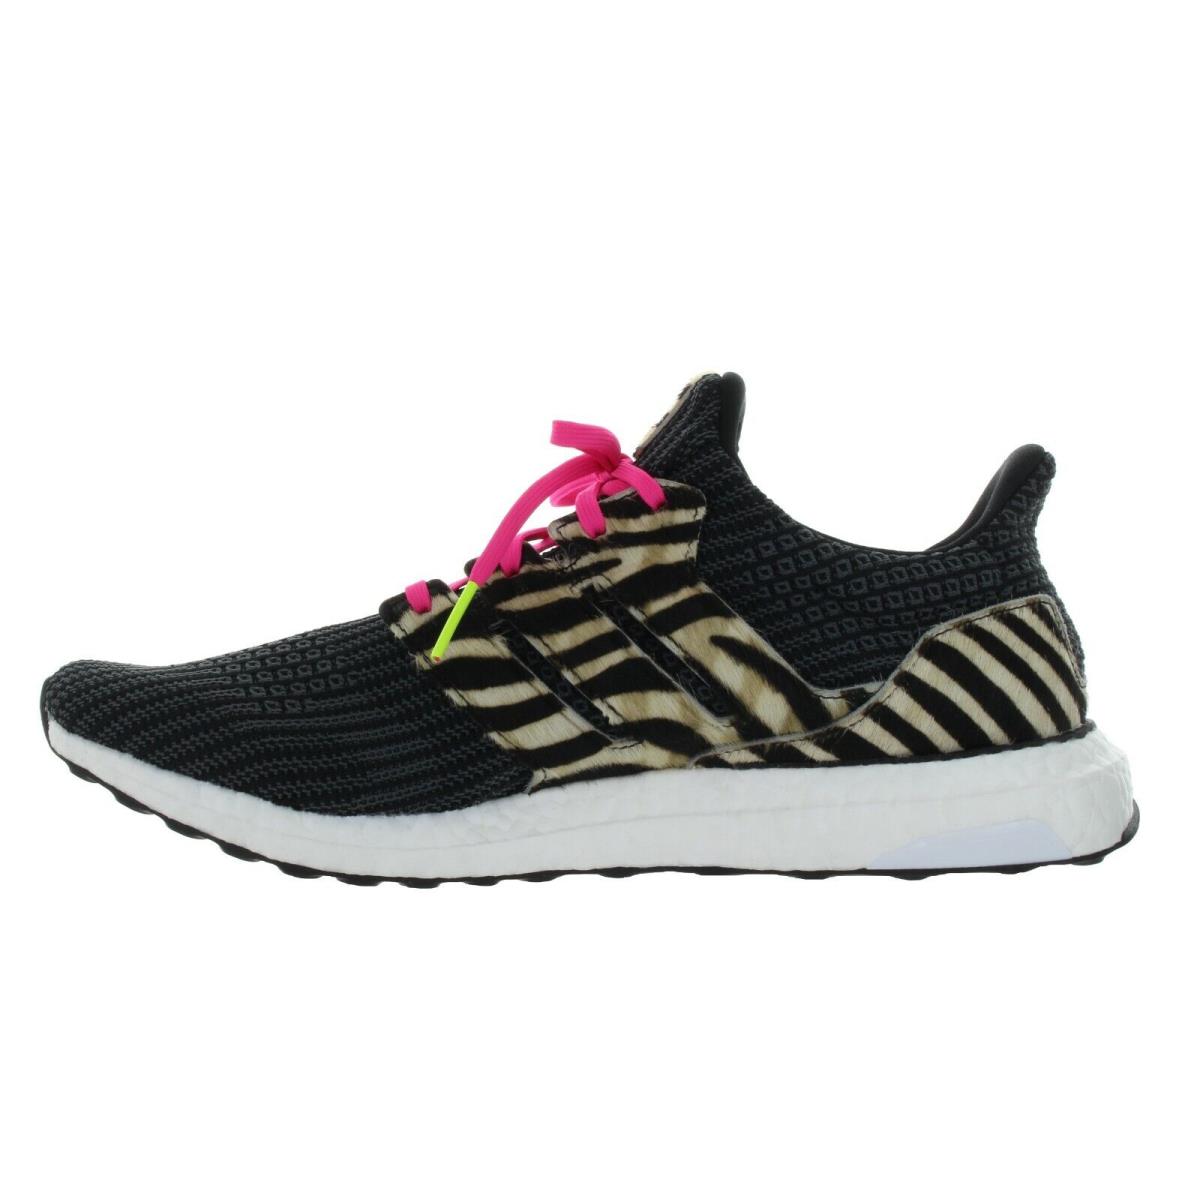 Adidas shoes UltraBoost DNA Zebra - Core Black, Cloud White, Shock Pink 1